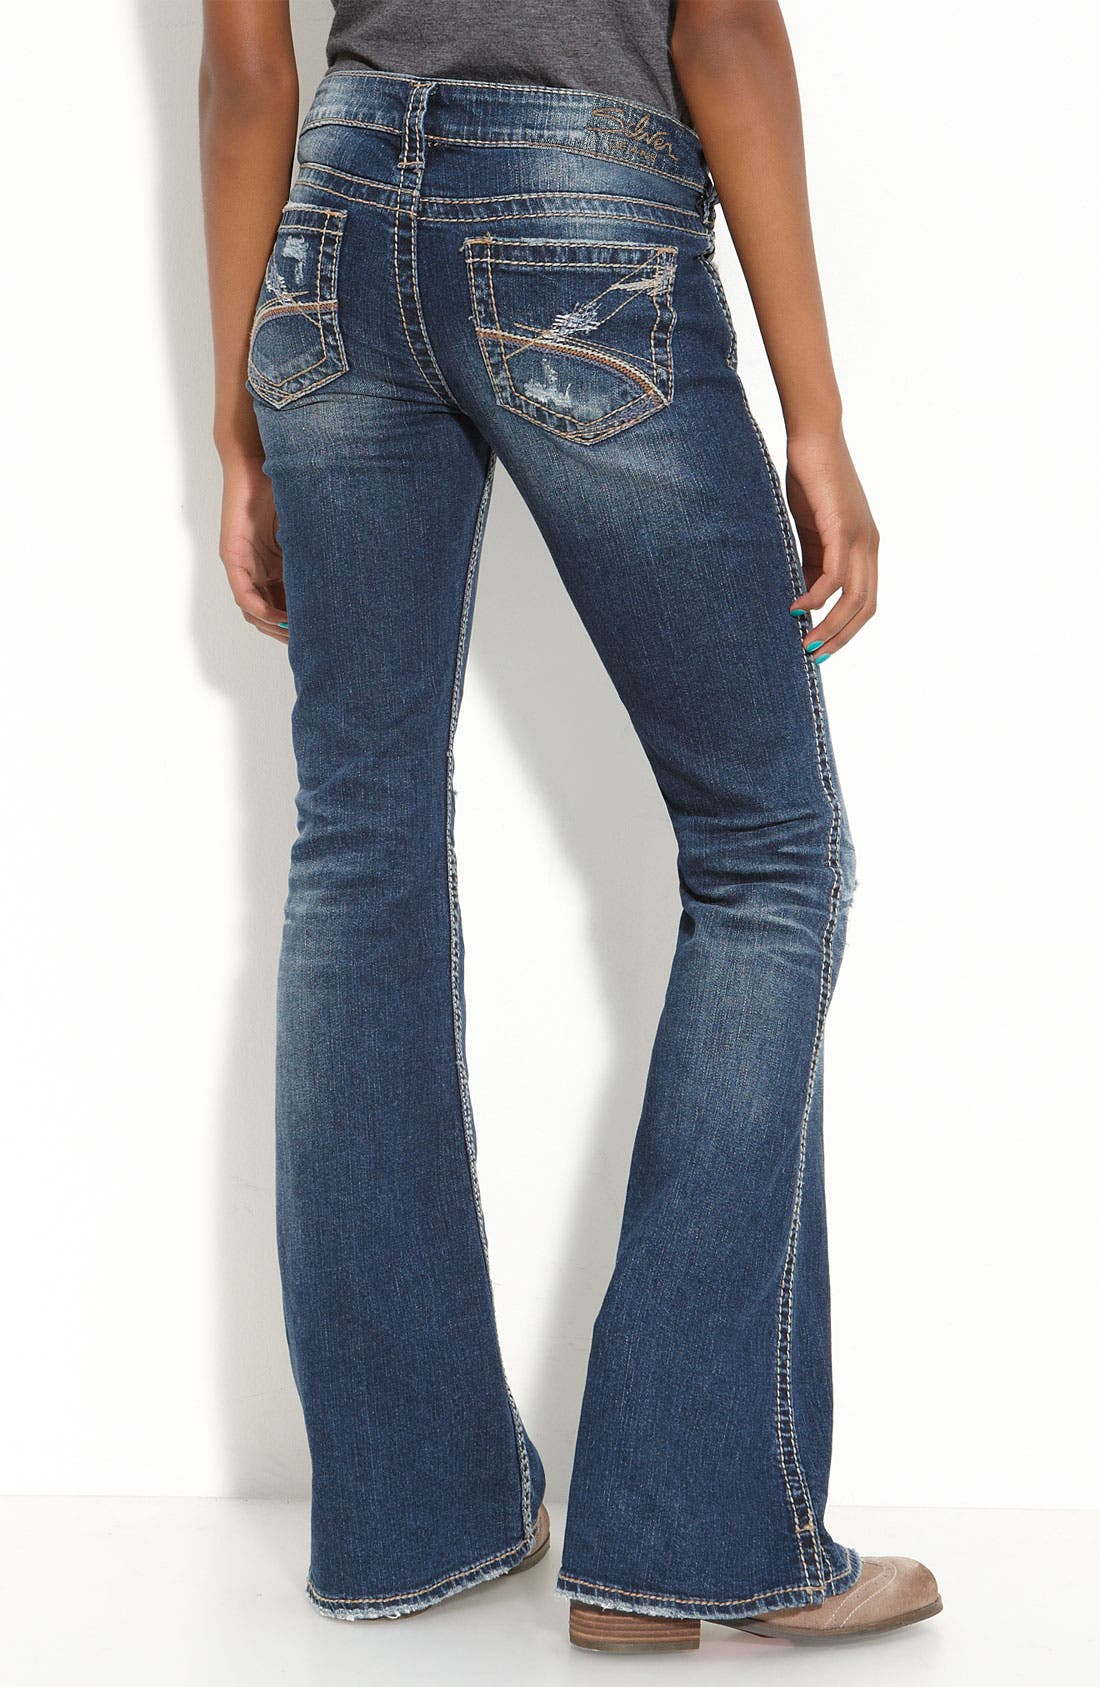 fuji jeans price